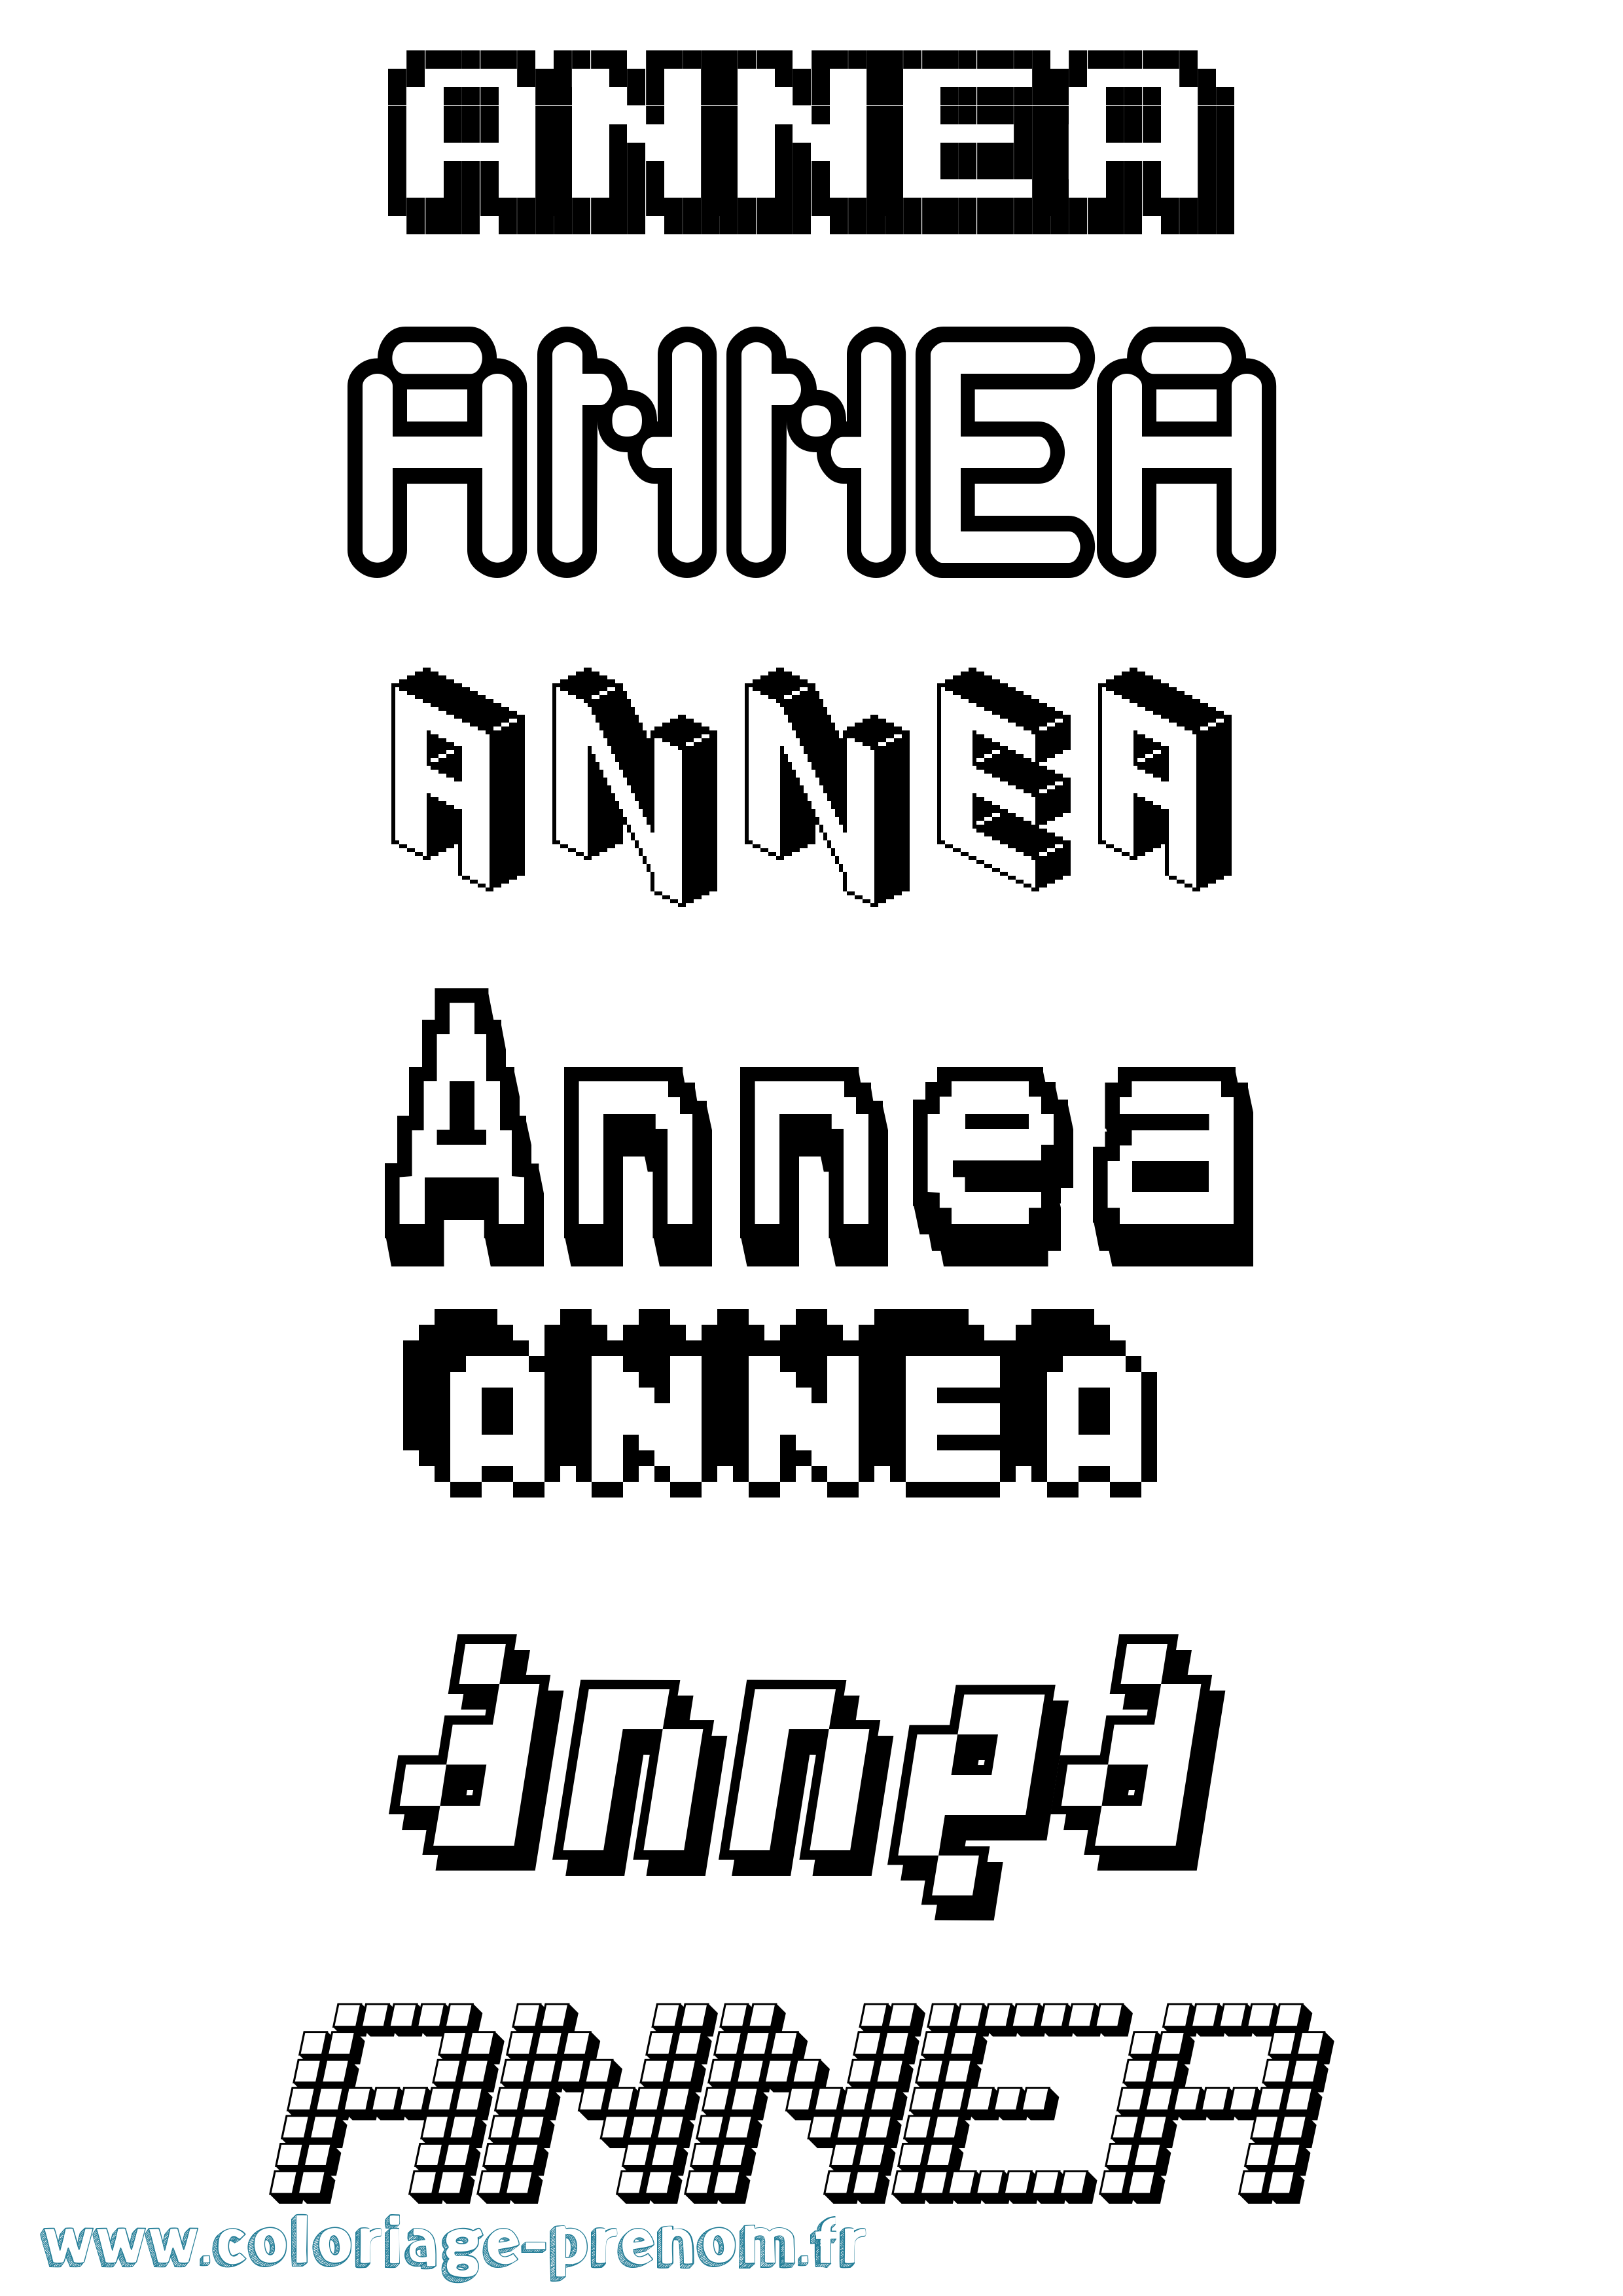 Coloriage prénom Annea Pixel